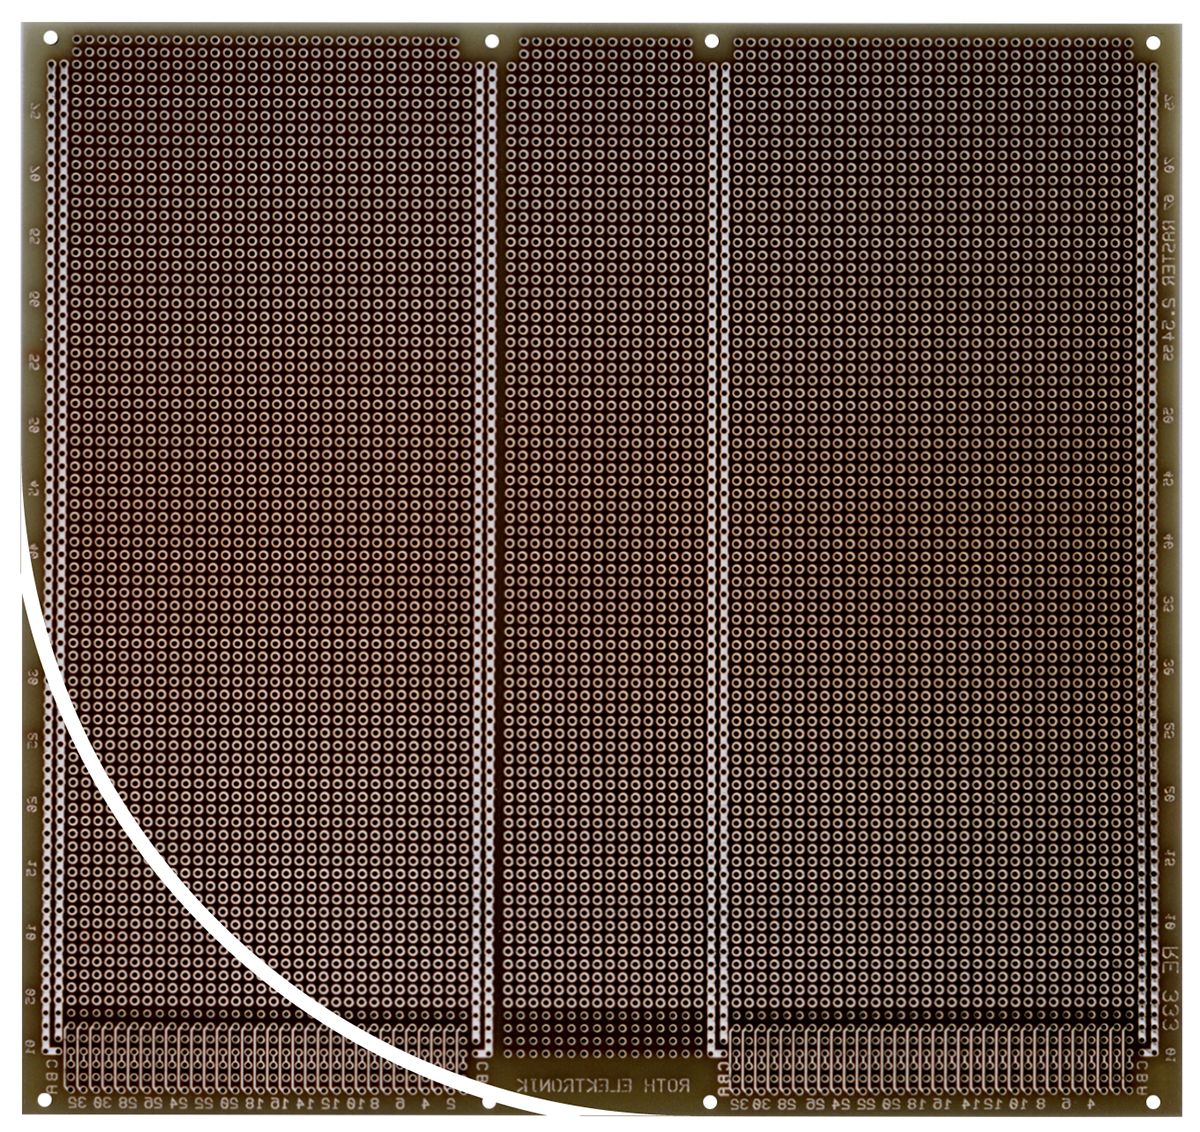 Roth Elektronik Double Sided Multibus II Board With 79 x 80 1mm Holes, 2.54 x 2.54mm Pitch, 233.4 x 220 x 1.5mm